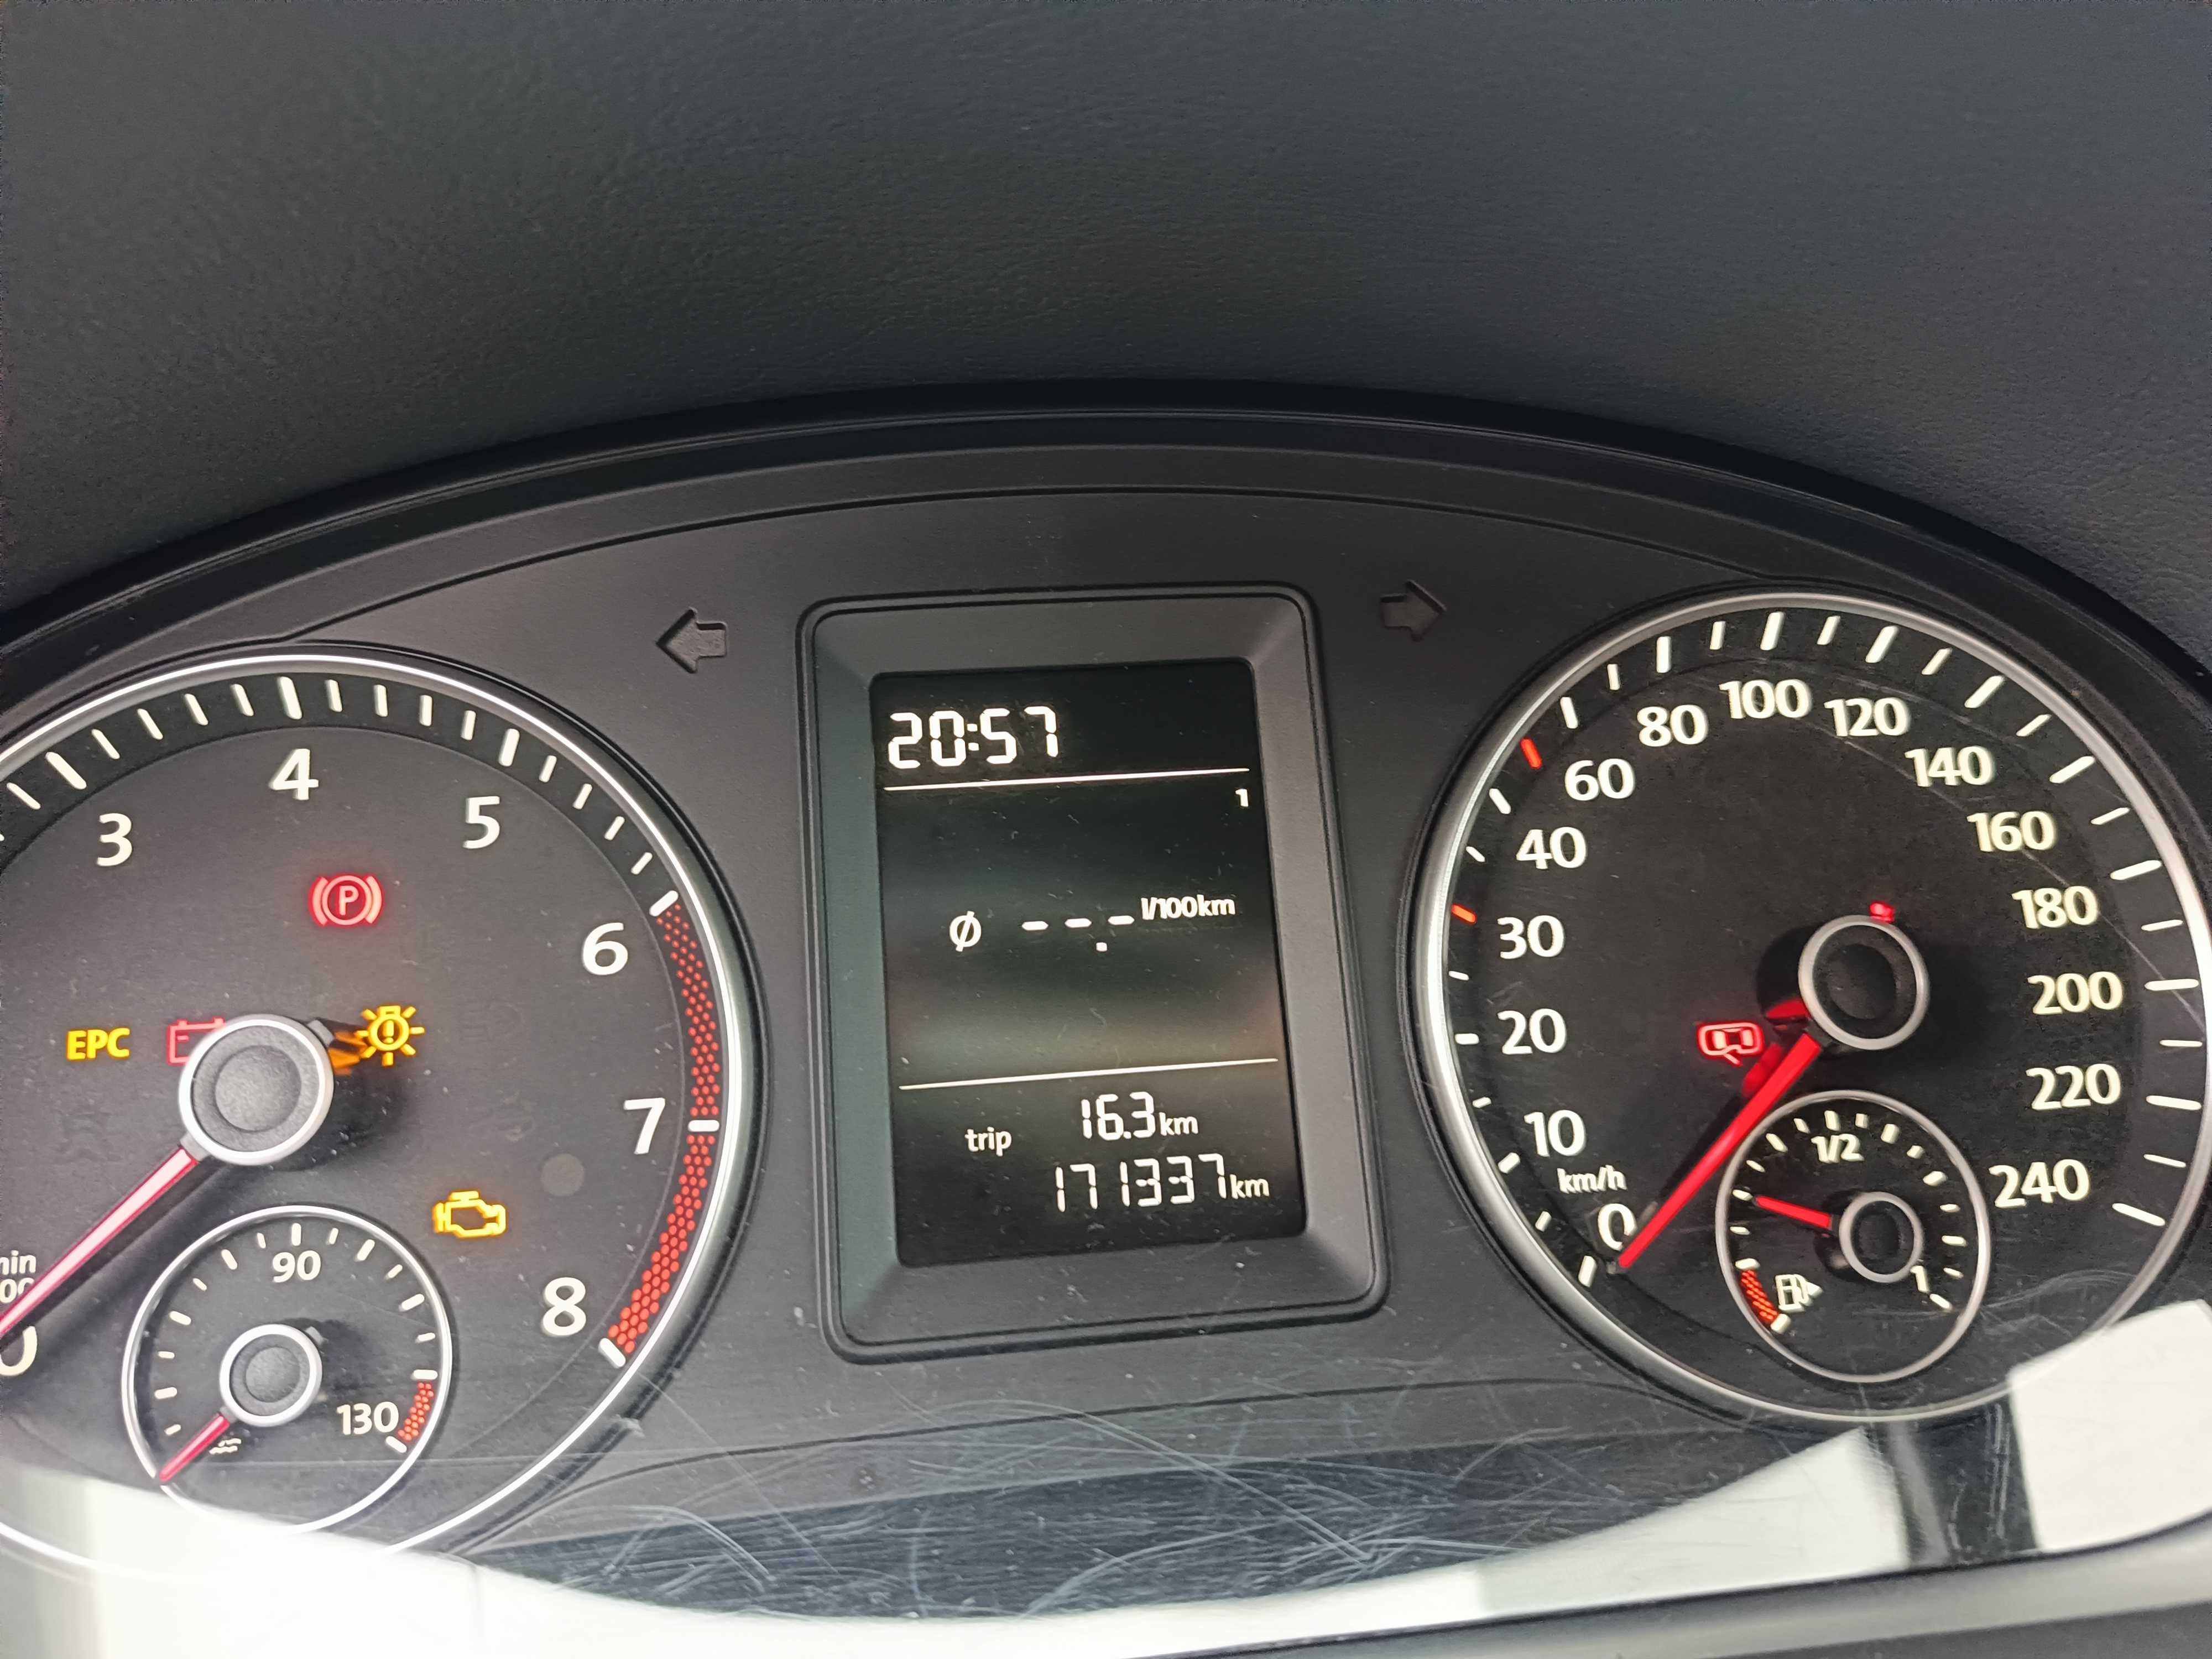 VW Touran 1.4 benzyna 140 KM  2012r